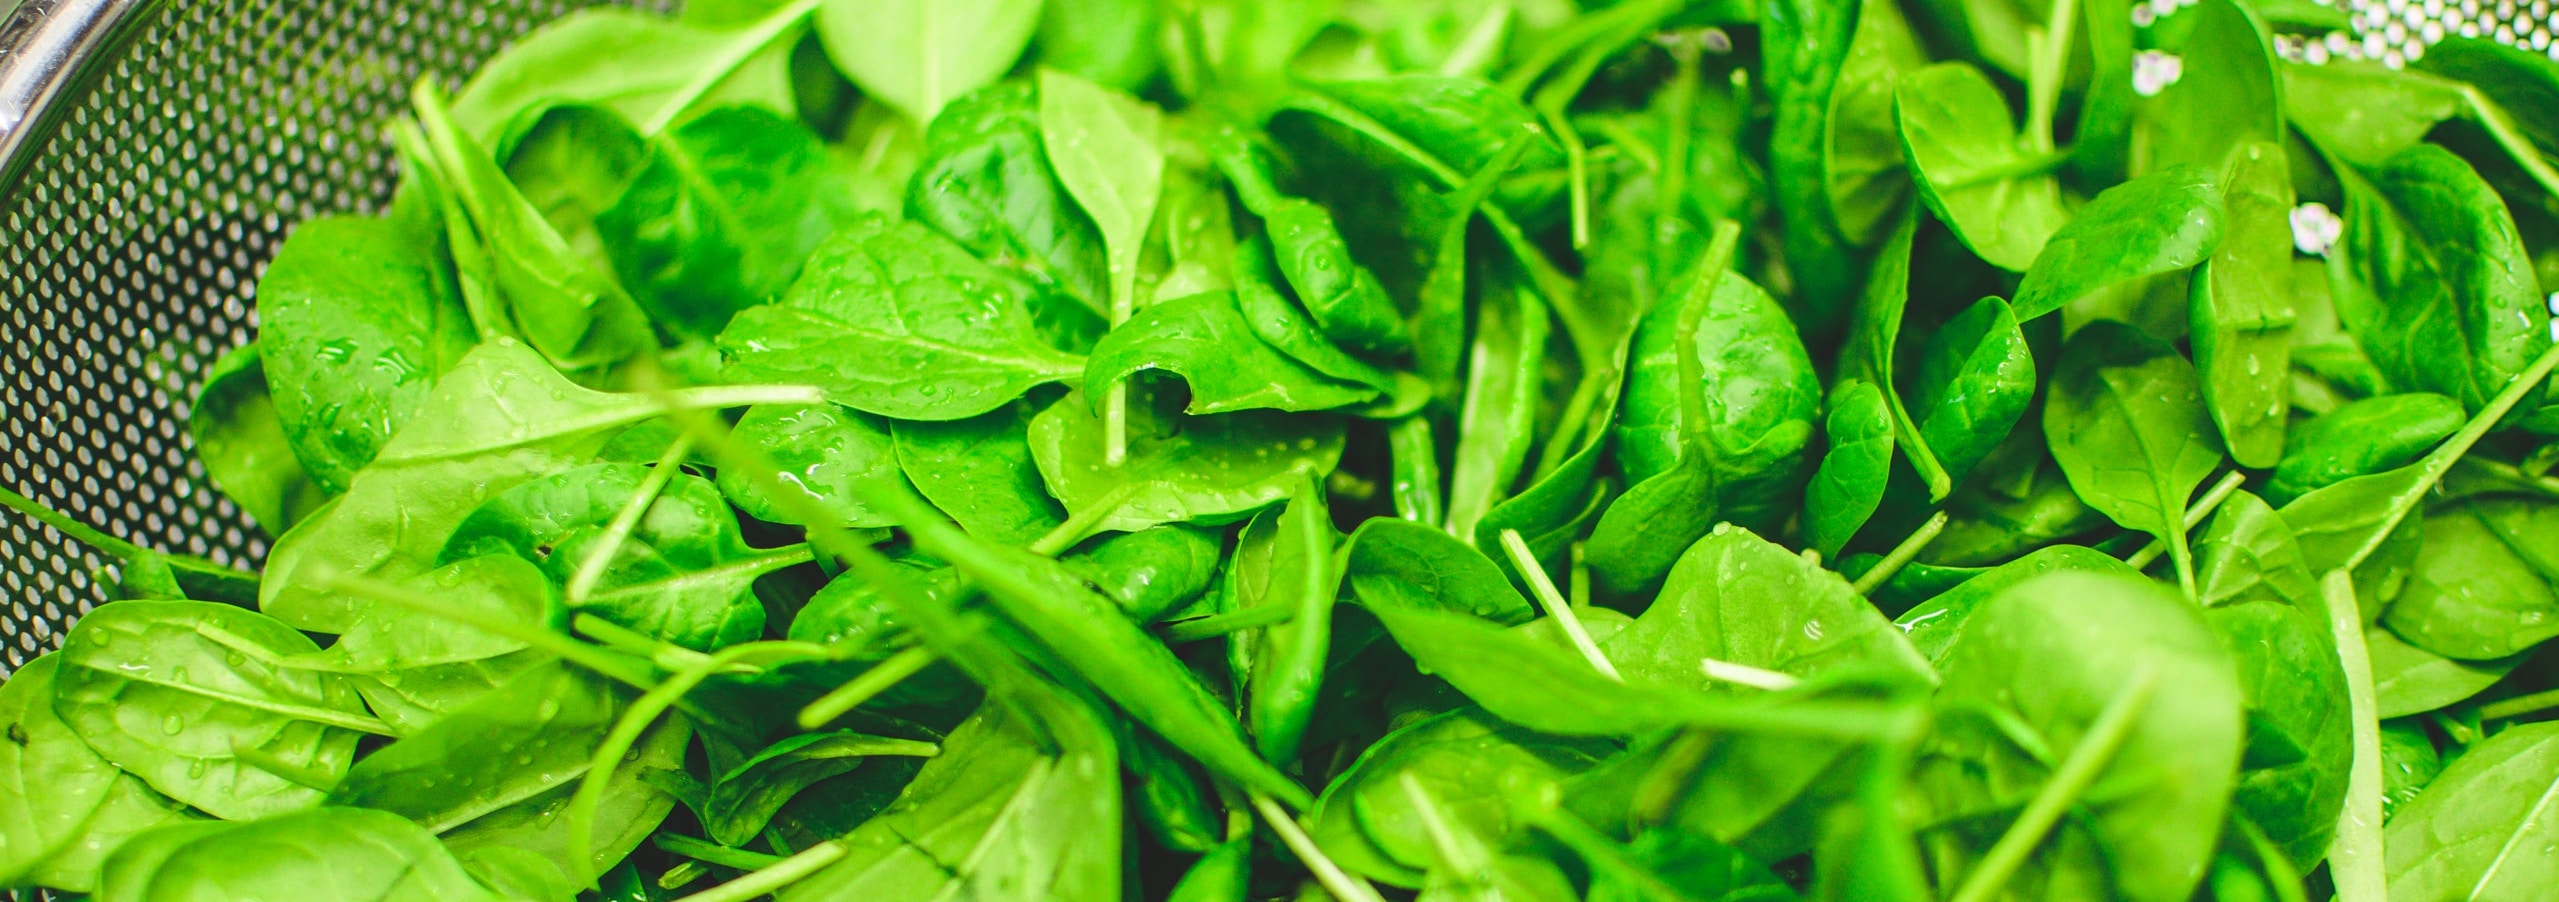 Spinach metabolism boosting food